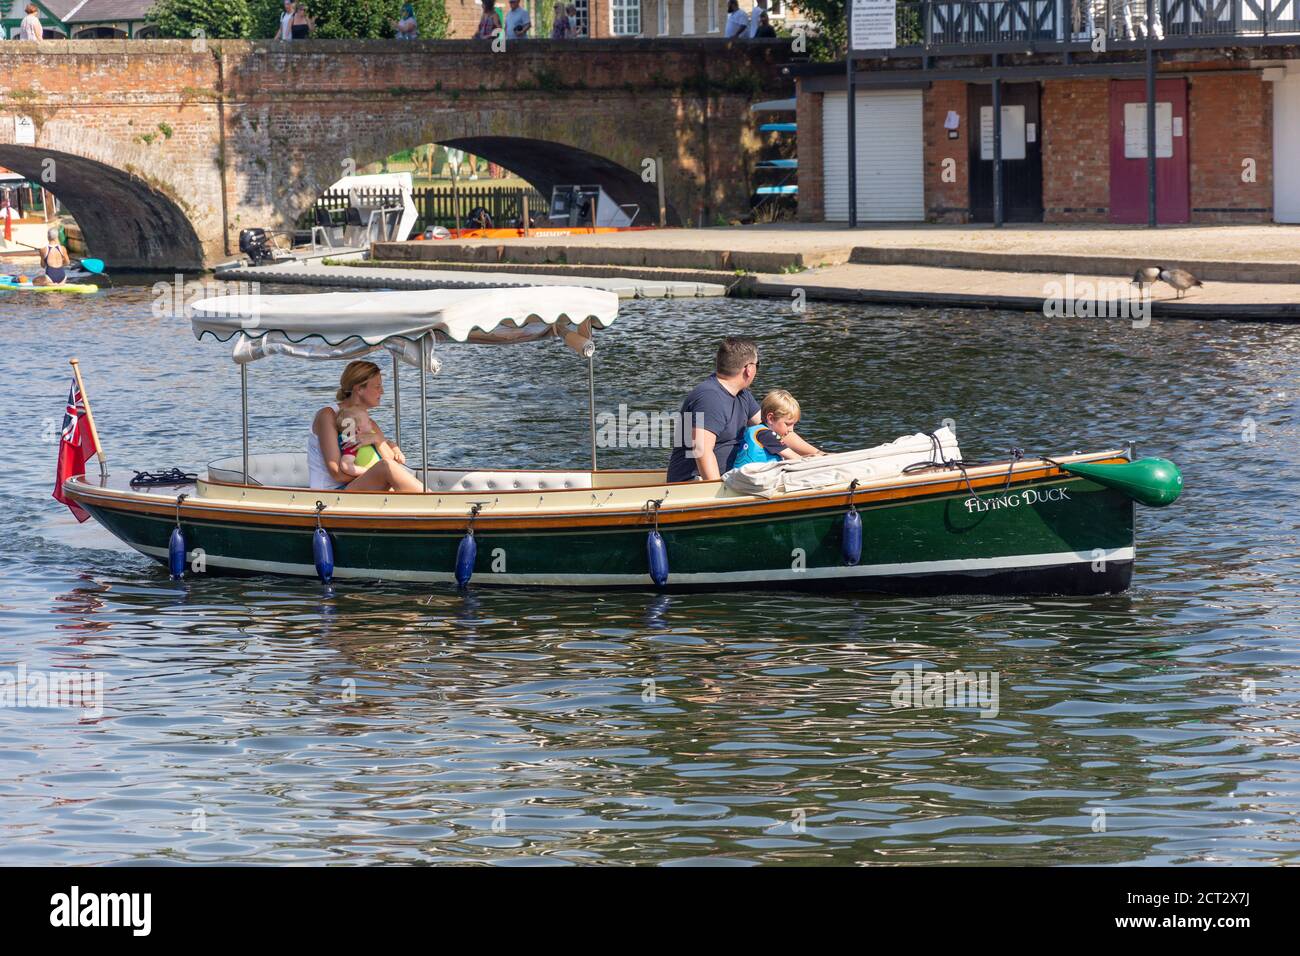 Family on motor boat on River Avon, Stratford-upon-Avon, Warwickshire, England, United Kingdom Stock Photo